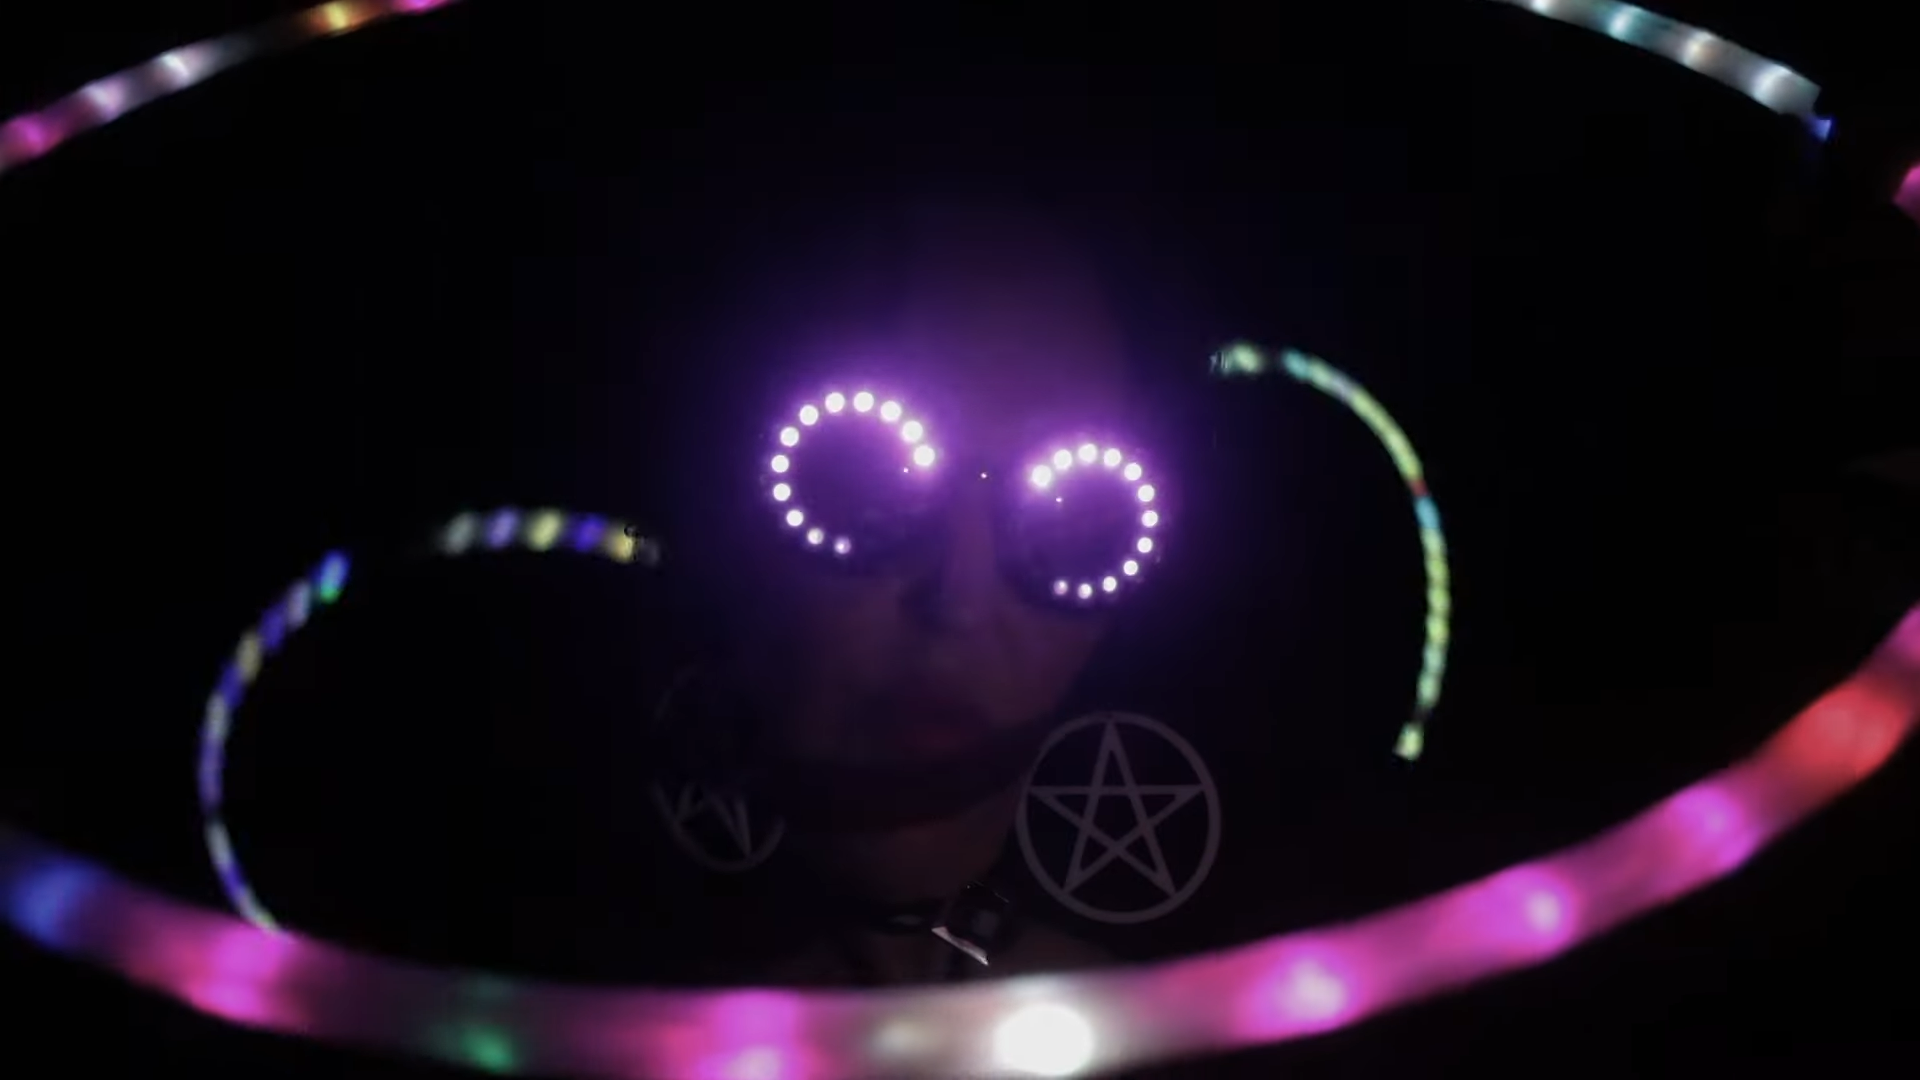 Screenshot of "Hex" music video from Metamorph's album of the same name.